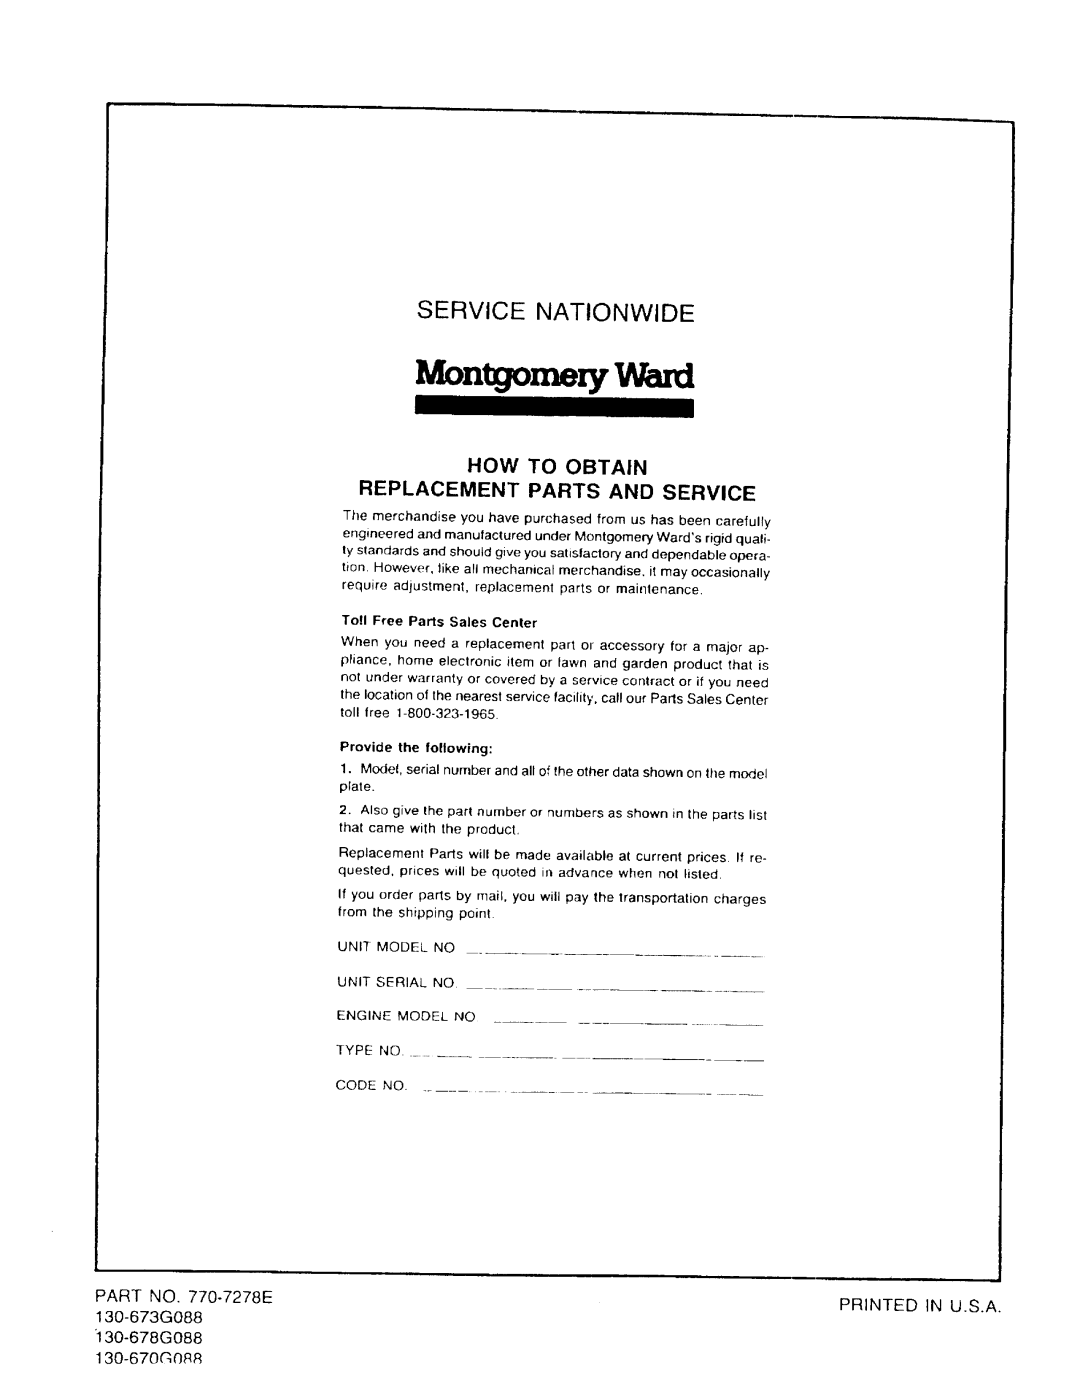 Montgomery Ward TMO-33942A, TMO-33941A, TMO-33940A manual 